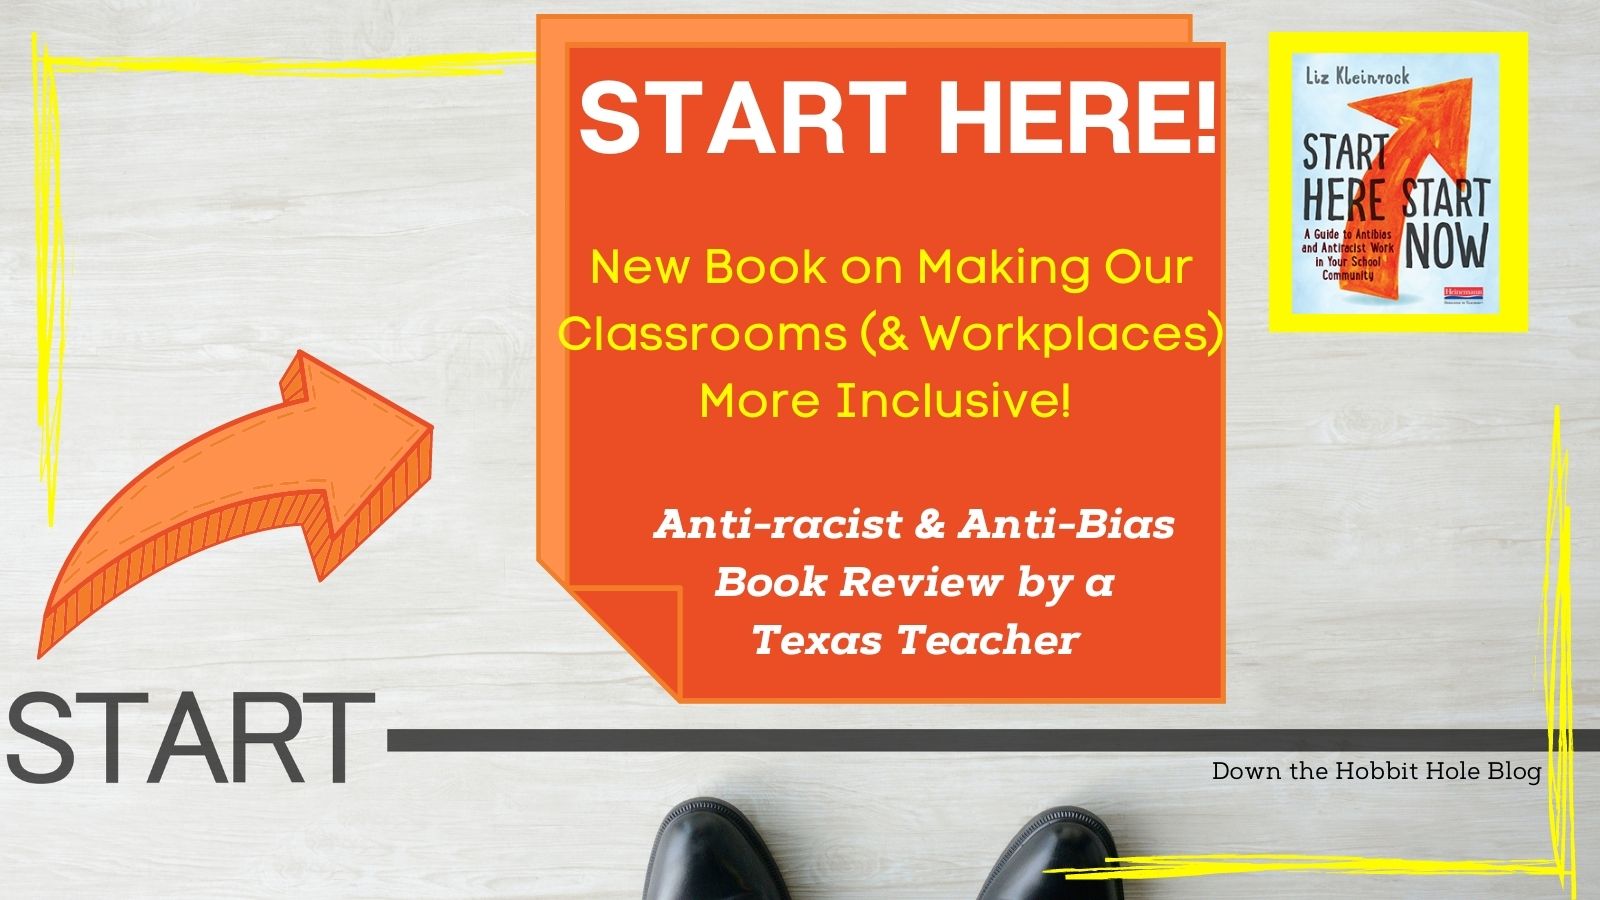 Start here start now book review by a teacher